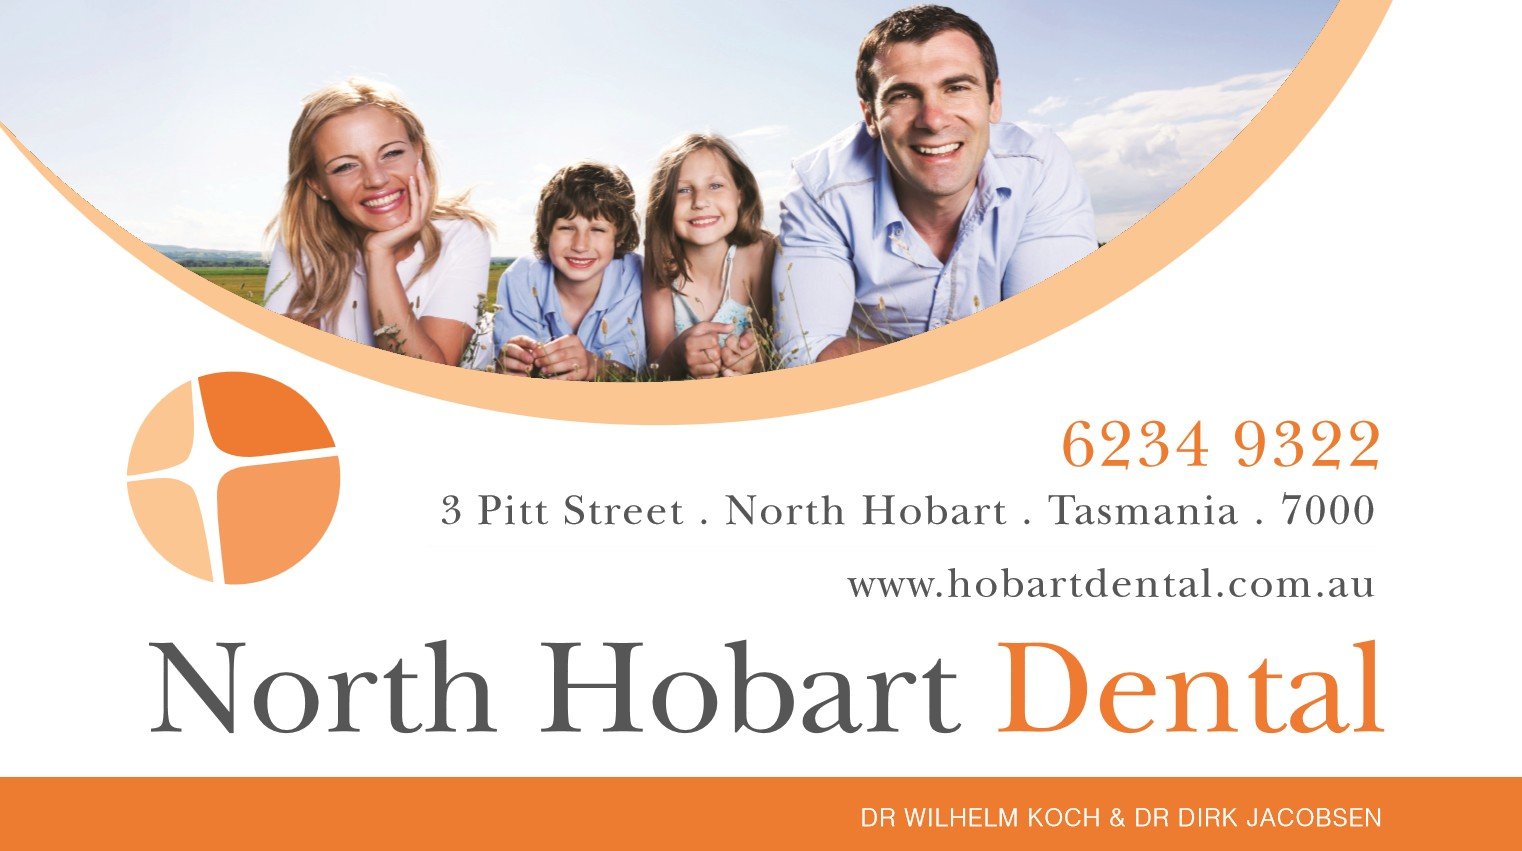 North Hobart Dental - Cairns Dentist 0